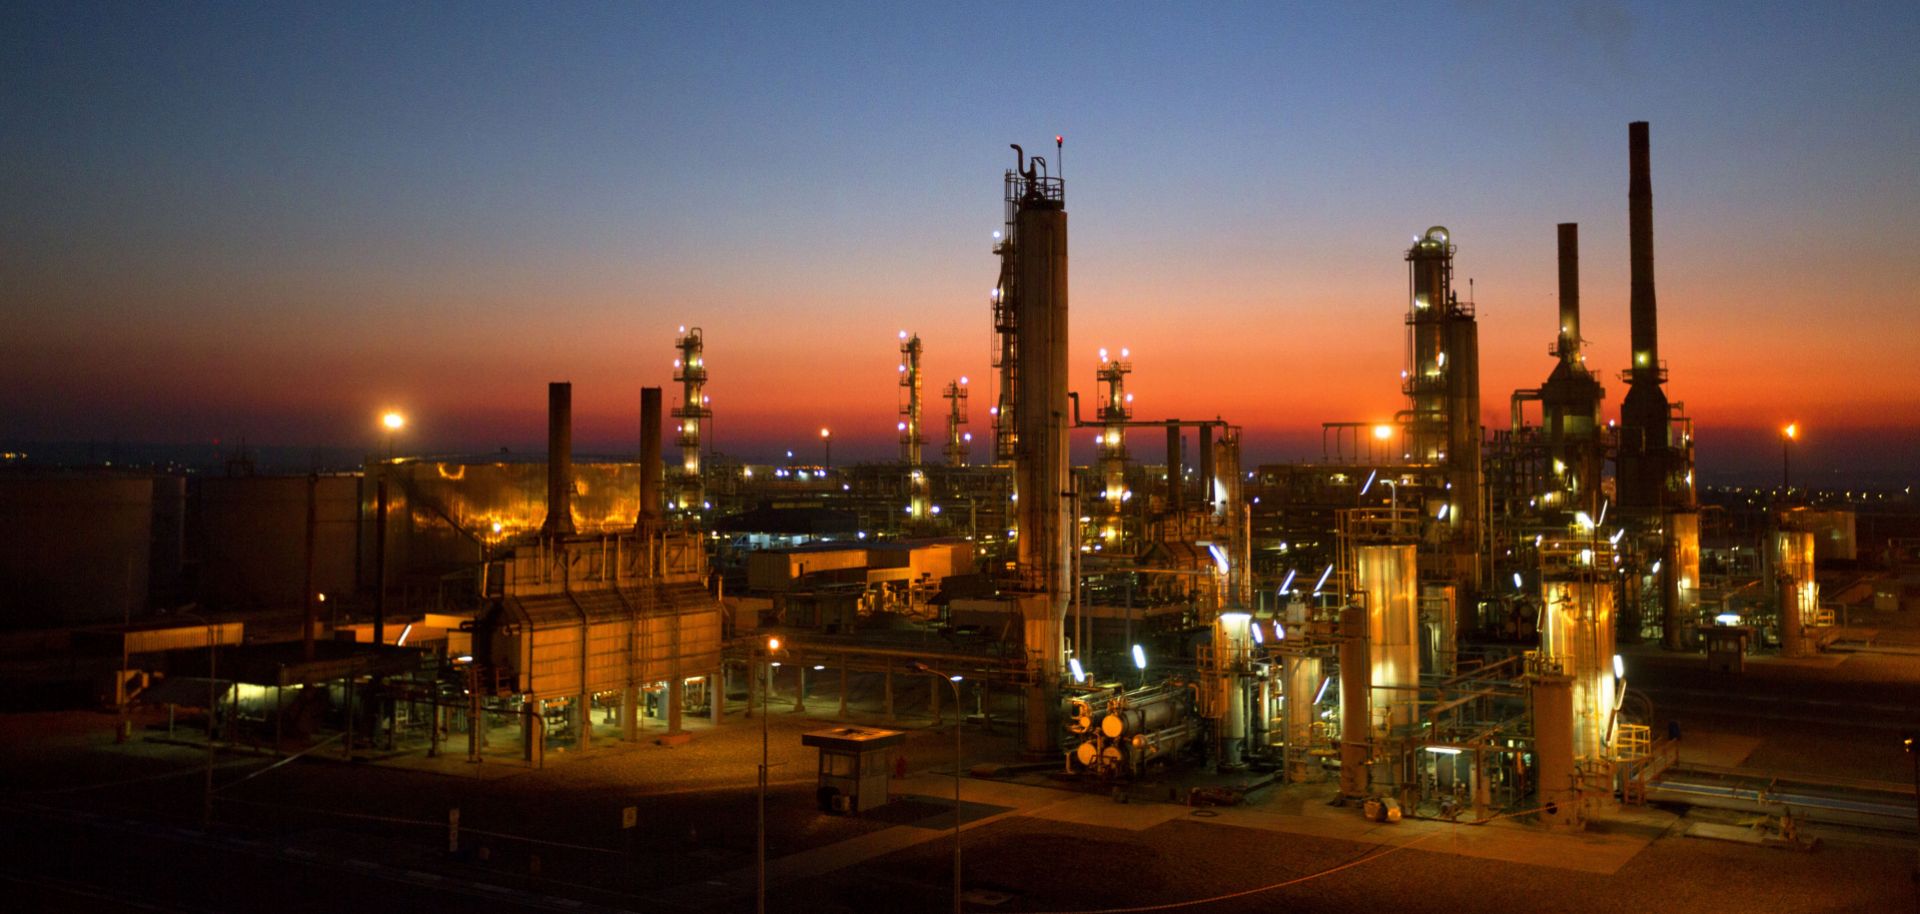 The Kawergosk oil refinery in Iraqi Kurdistan is seen at sunset. 